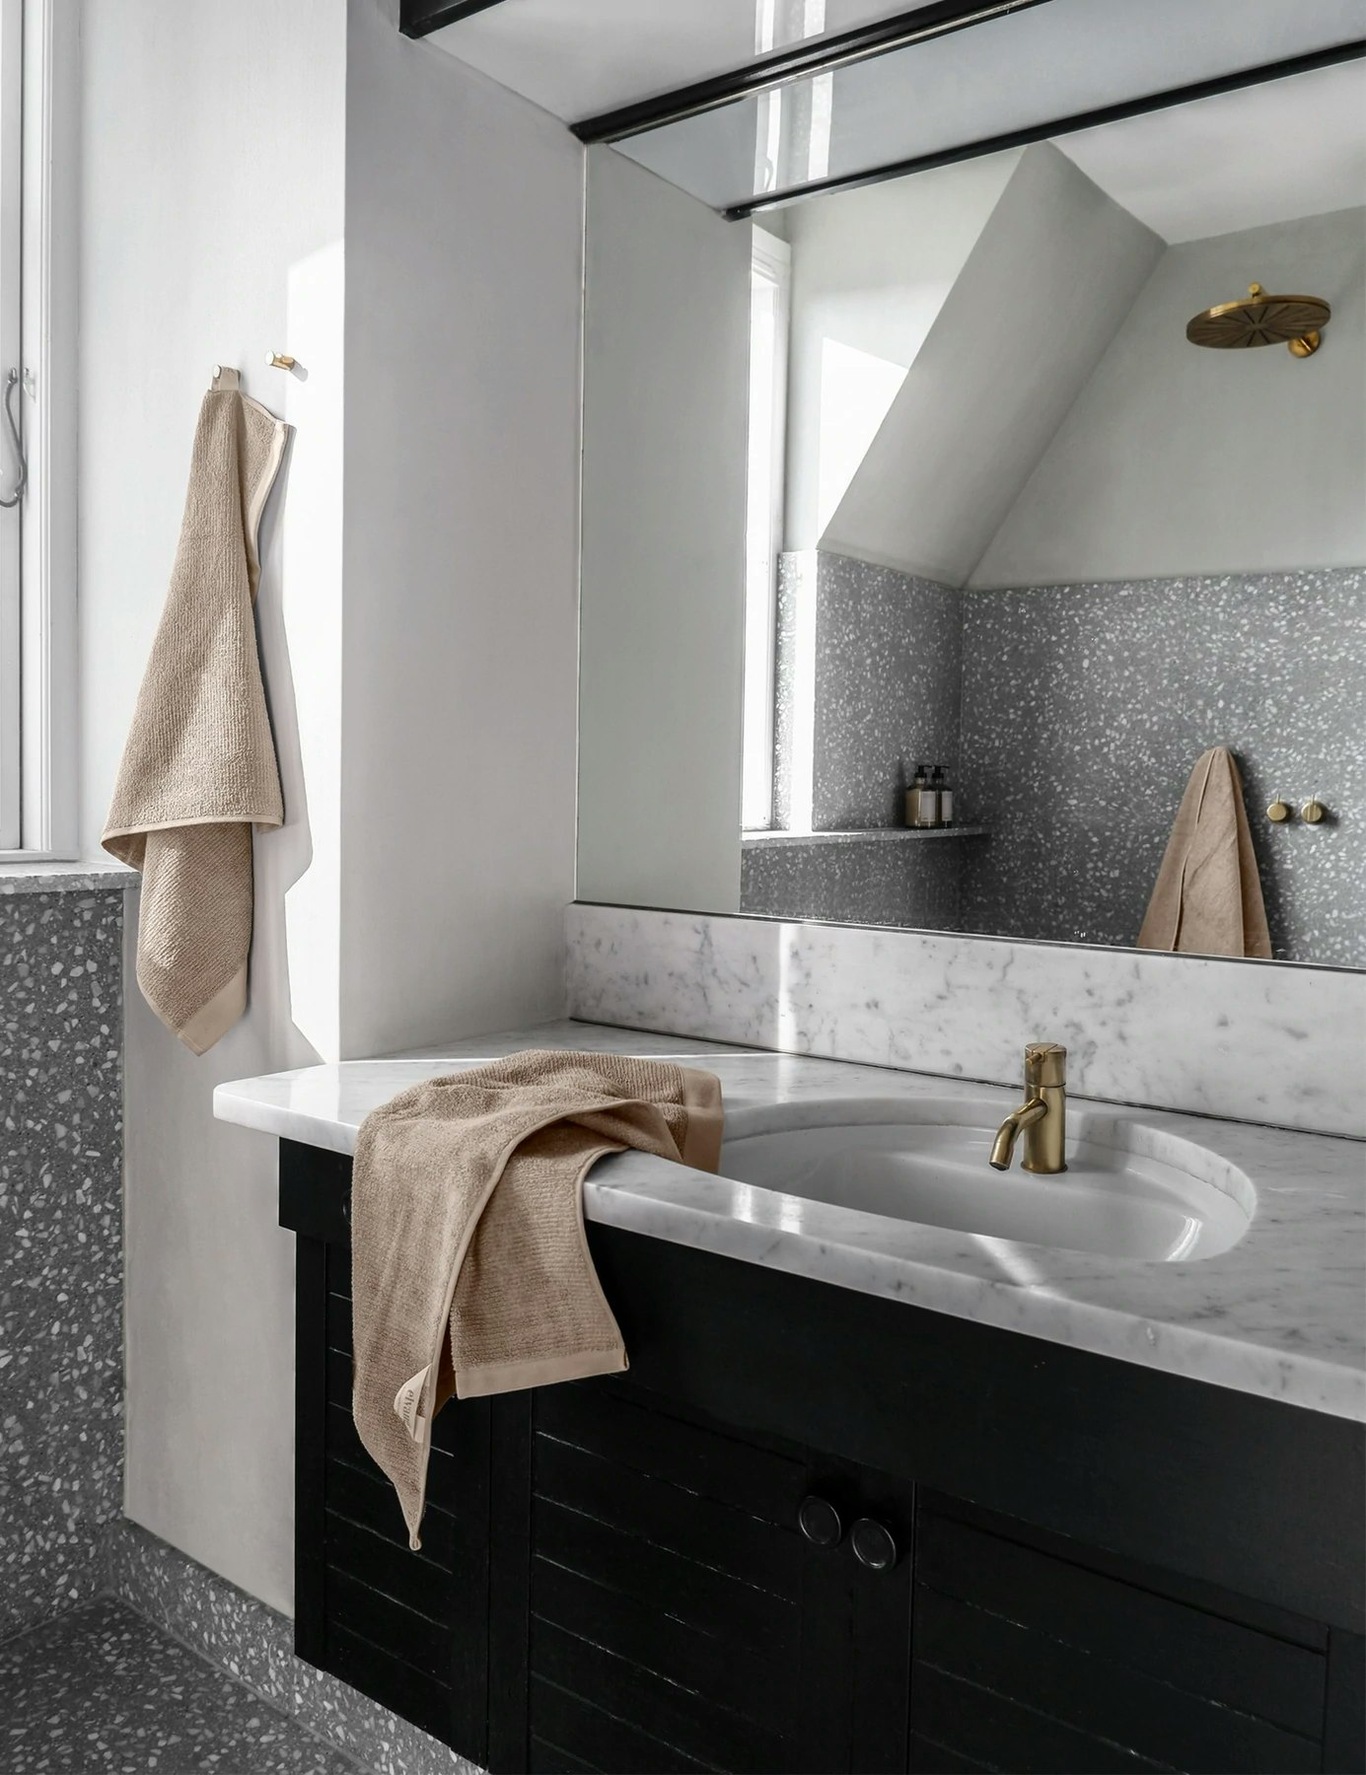 Elvang Elegance Towel 50x70 cm - Handtowels & Bathtowels Organic Cotton Grey - 97001-grey